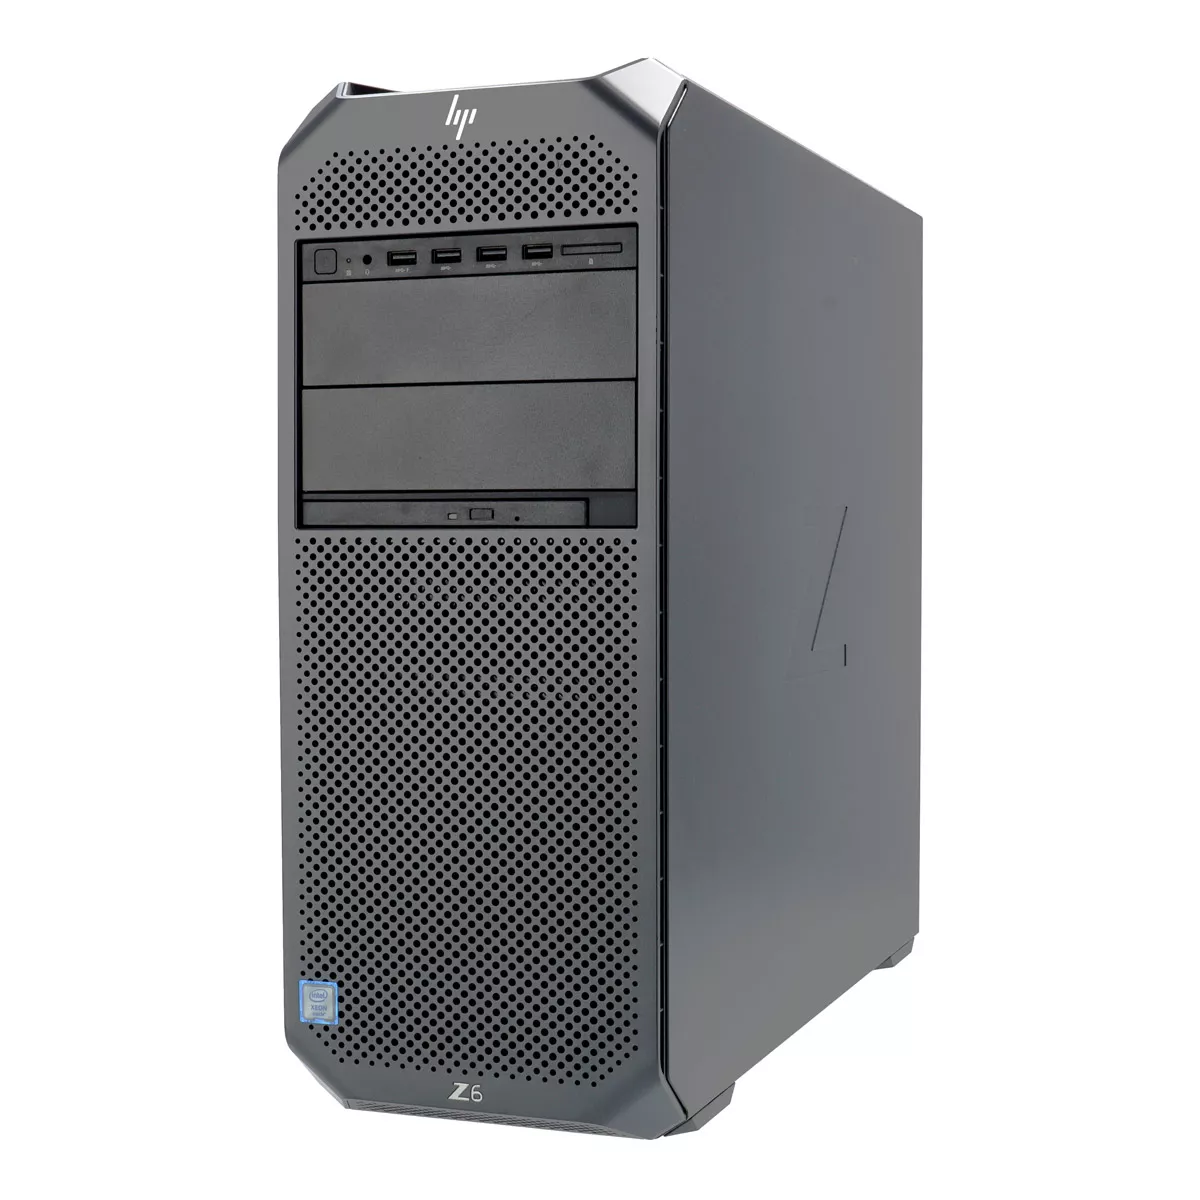 HP Z6 G4 Xeon QuadCore Silver 4112 nVidia Quadro P4000 500 GB SSD B